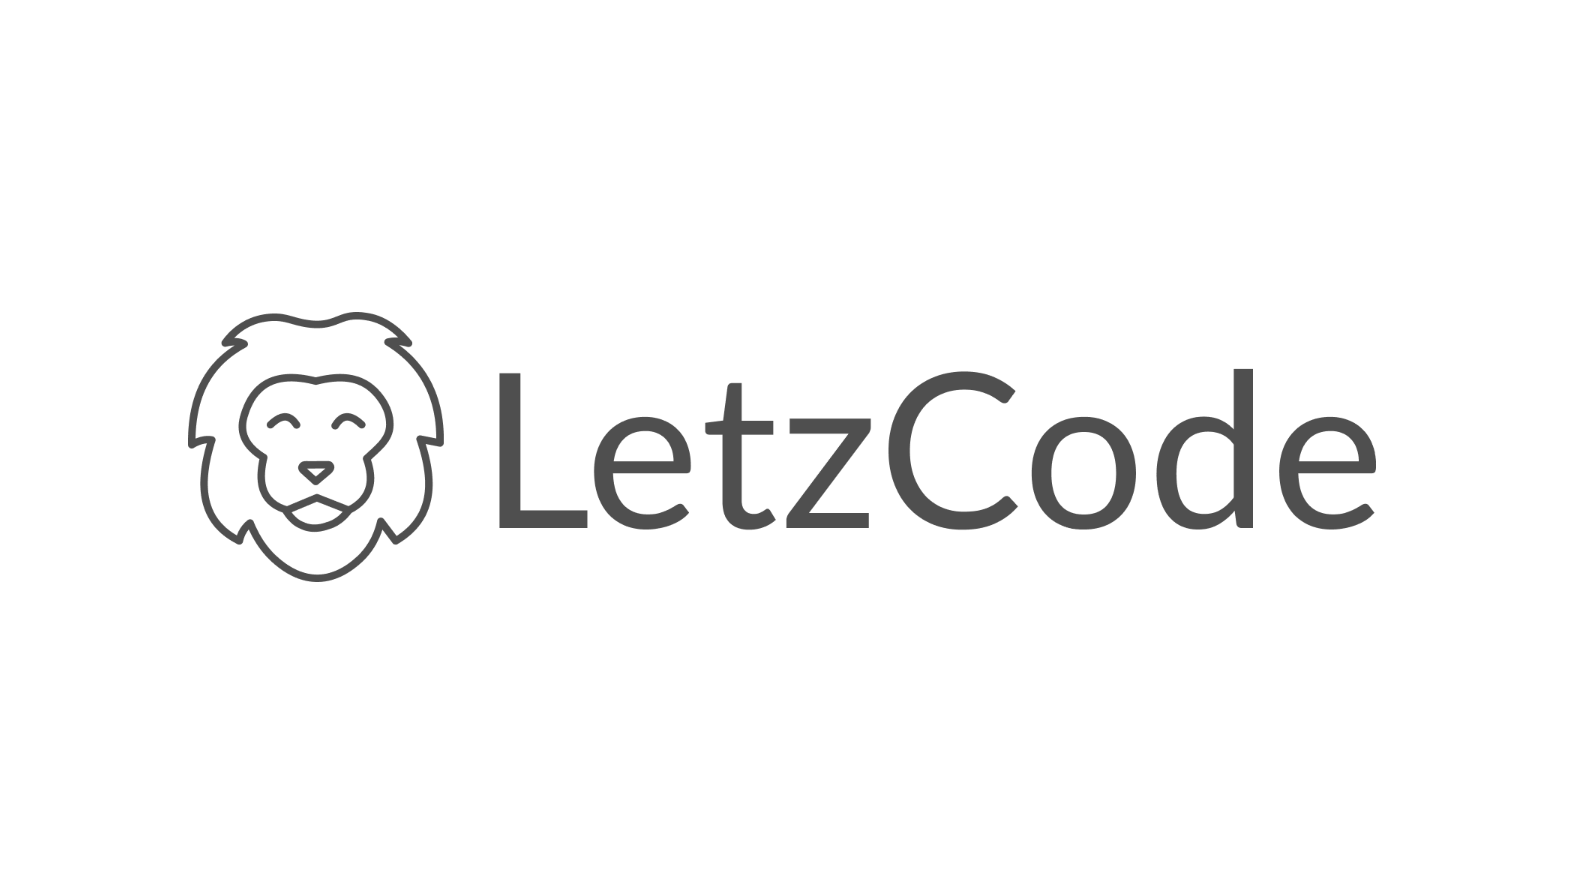 LetzCode – We'll make IT!